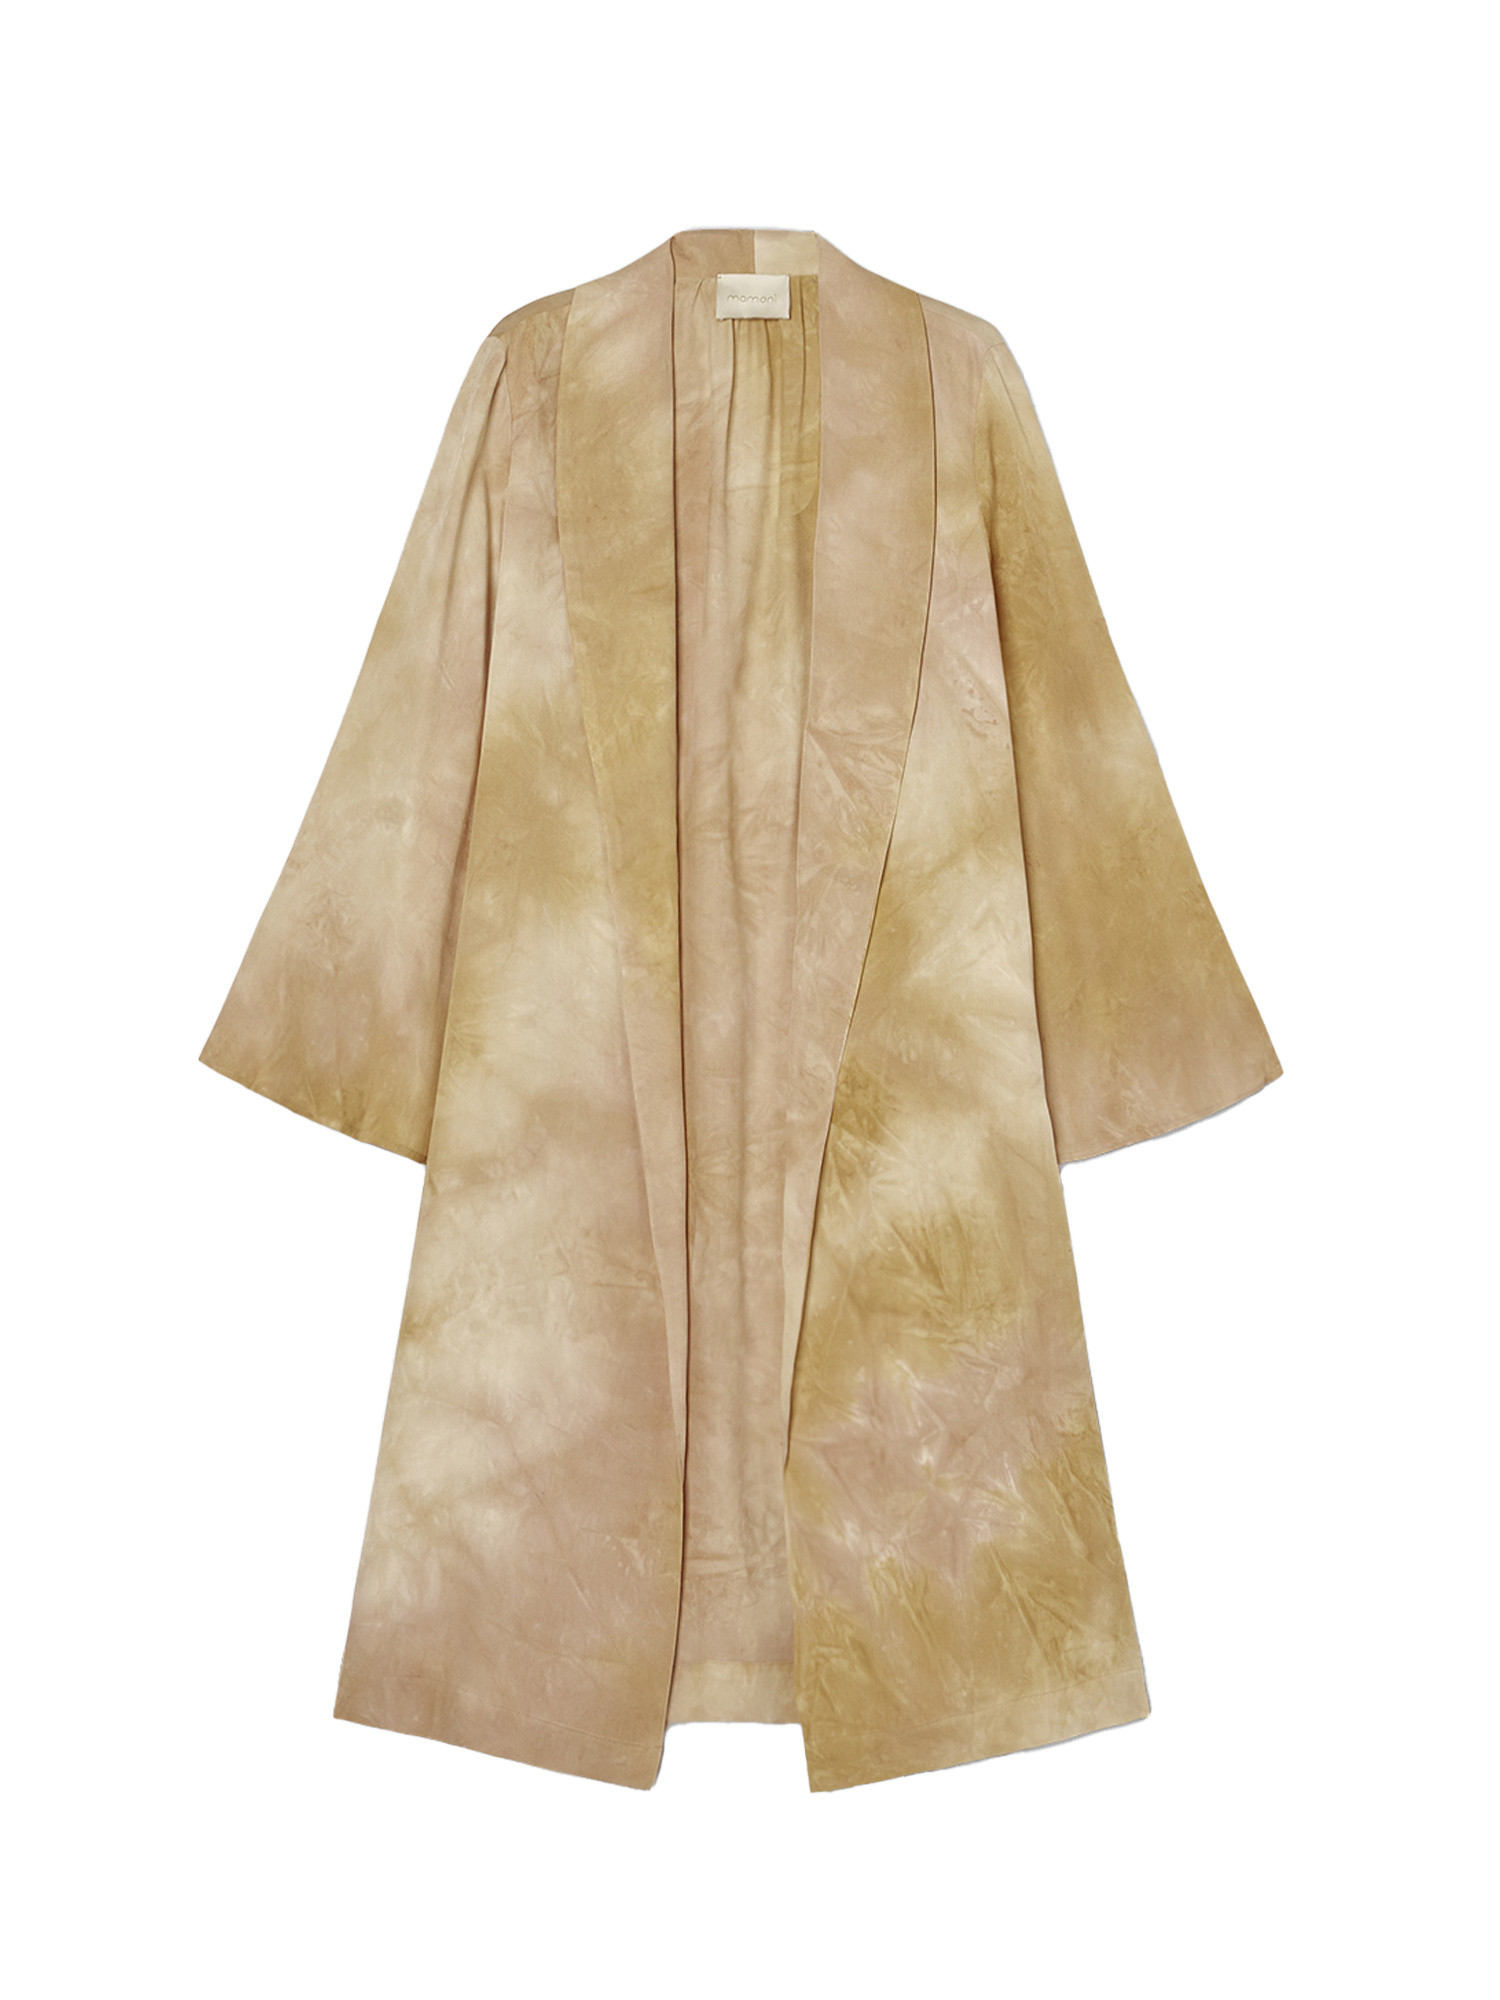 Momonì - Amandine coat in tie-dyed viscose, Multicolor, large image number 0